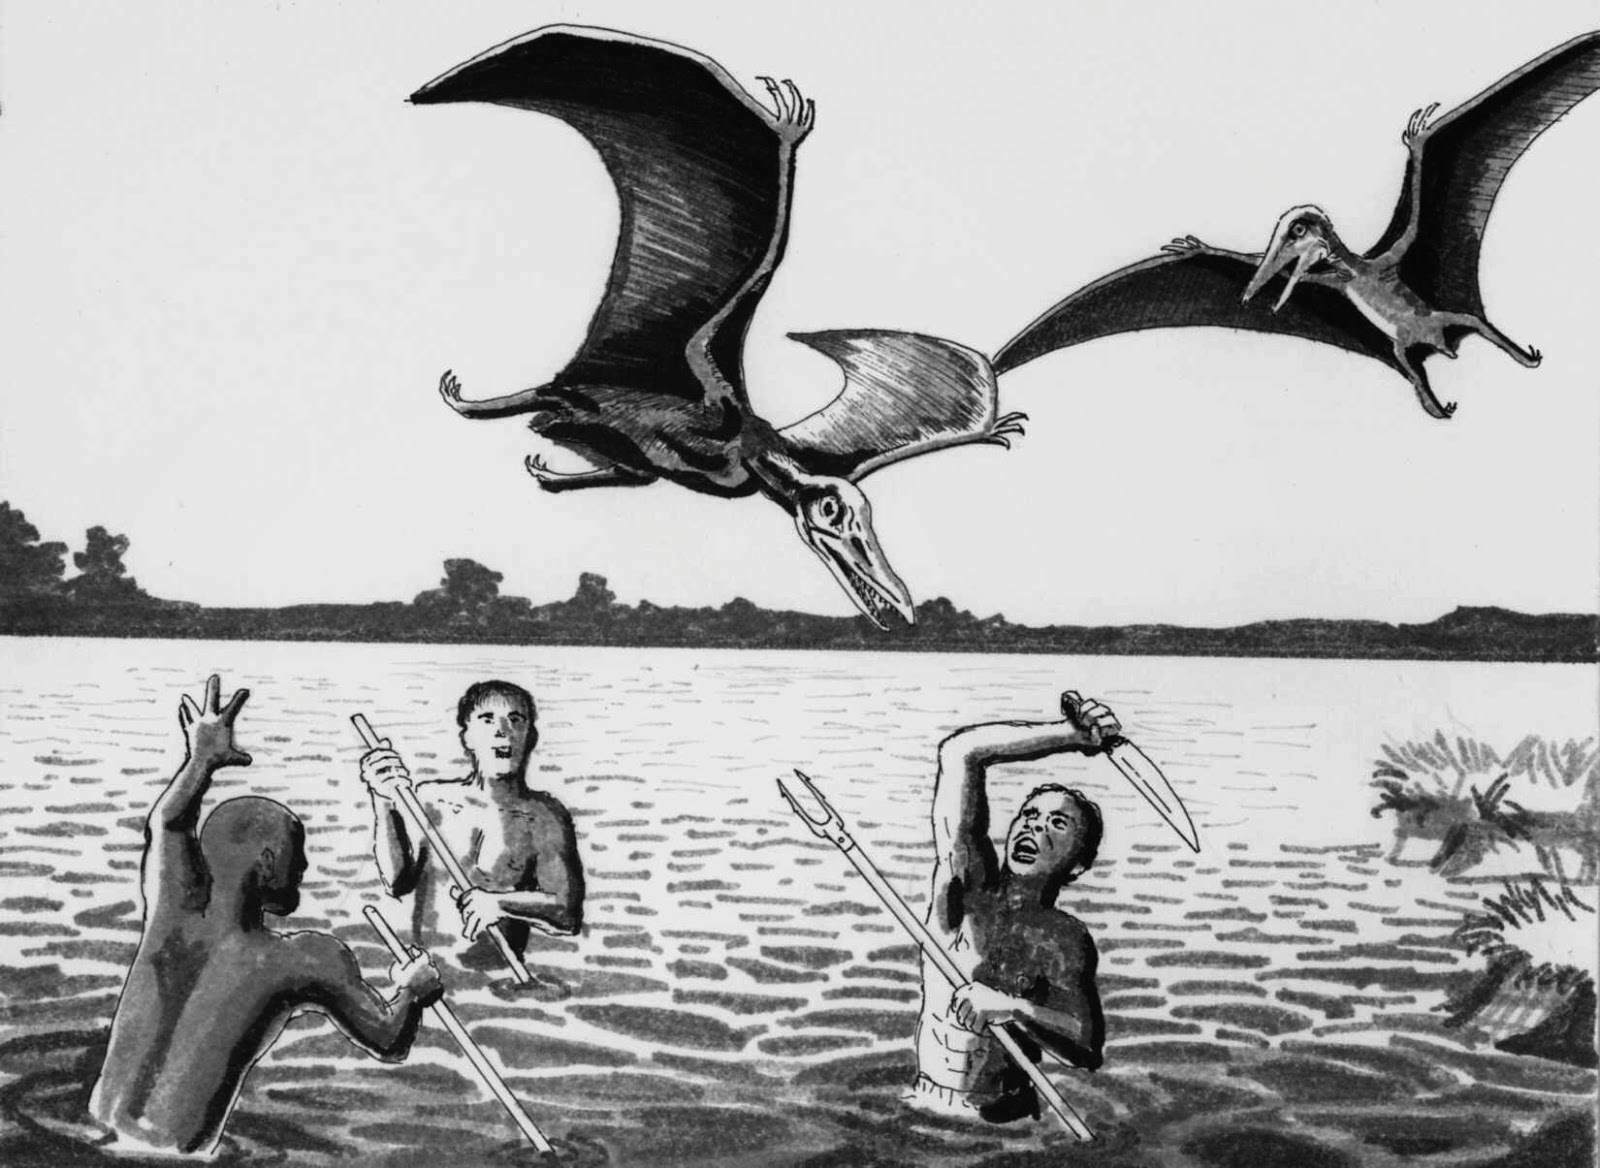 Kongamato - អ្នកណានិយាយថា pterosaurs ផុតពូជ? ៧